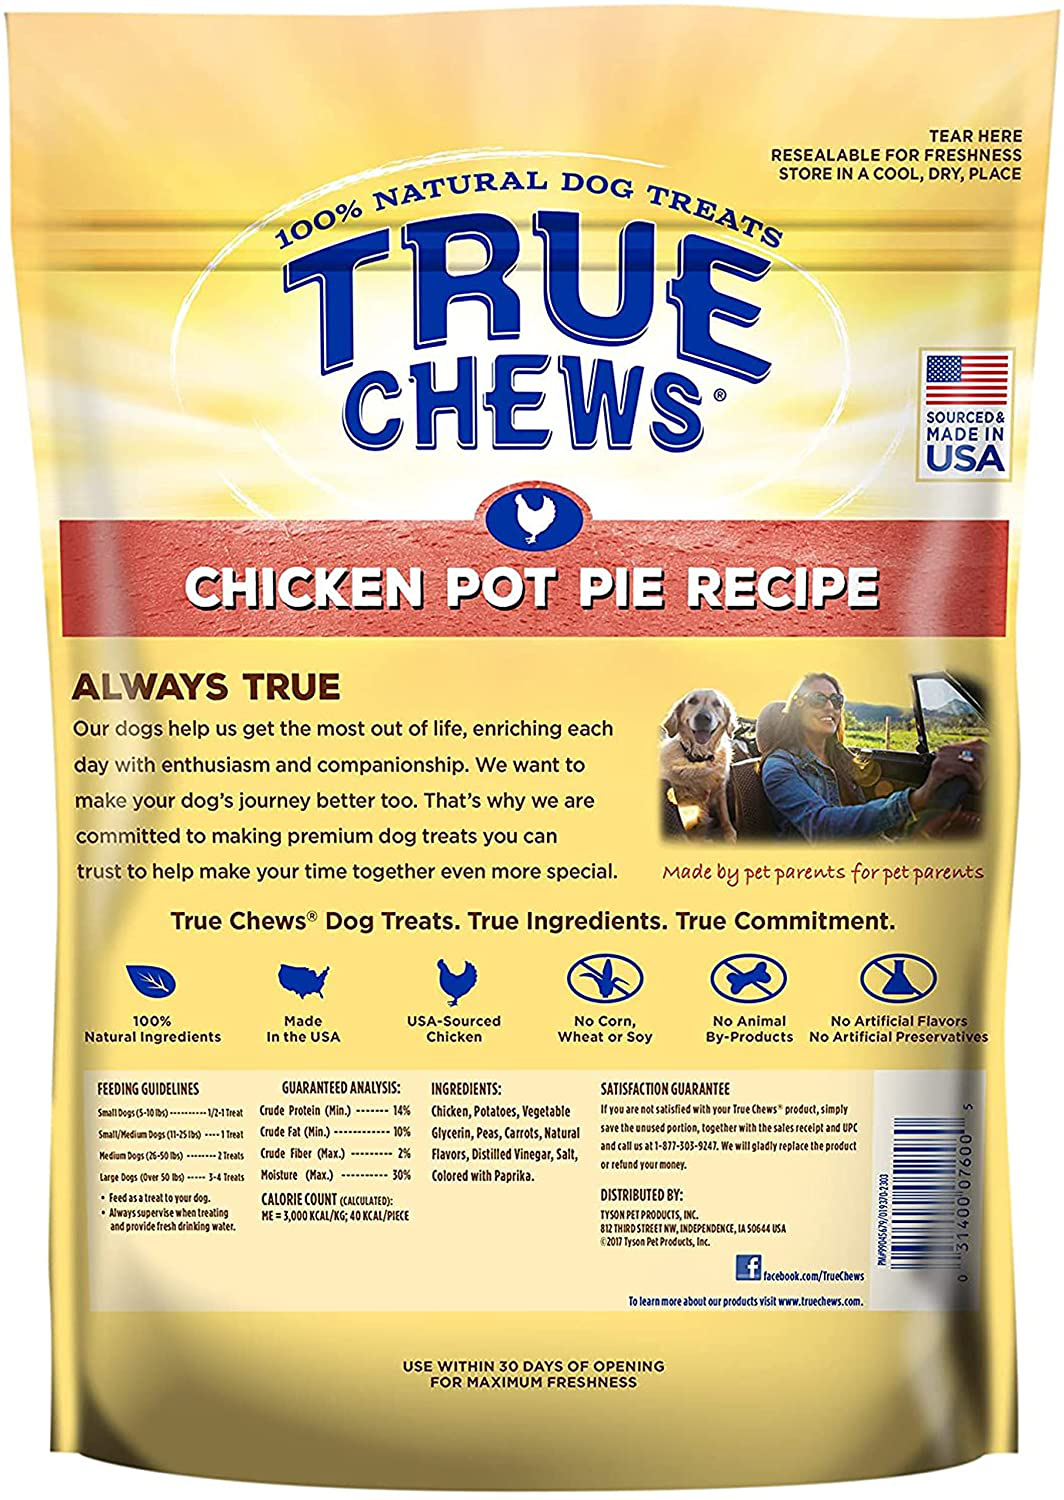 Natural Dog Treats Chicken Pot Pie Recipe Animals & Pet Supplies > Pet Supplies > Dog Supplies > Dog Treats True Chews   